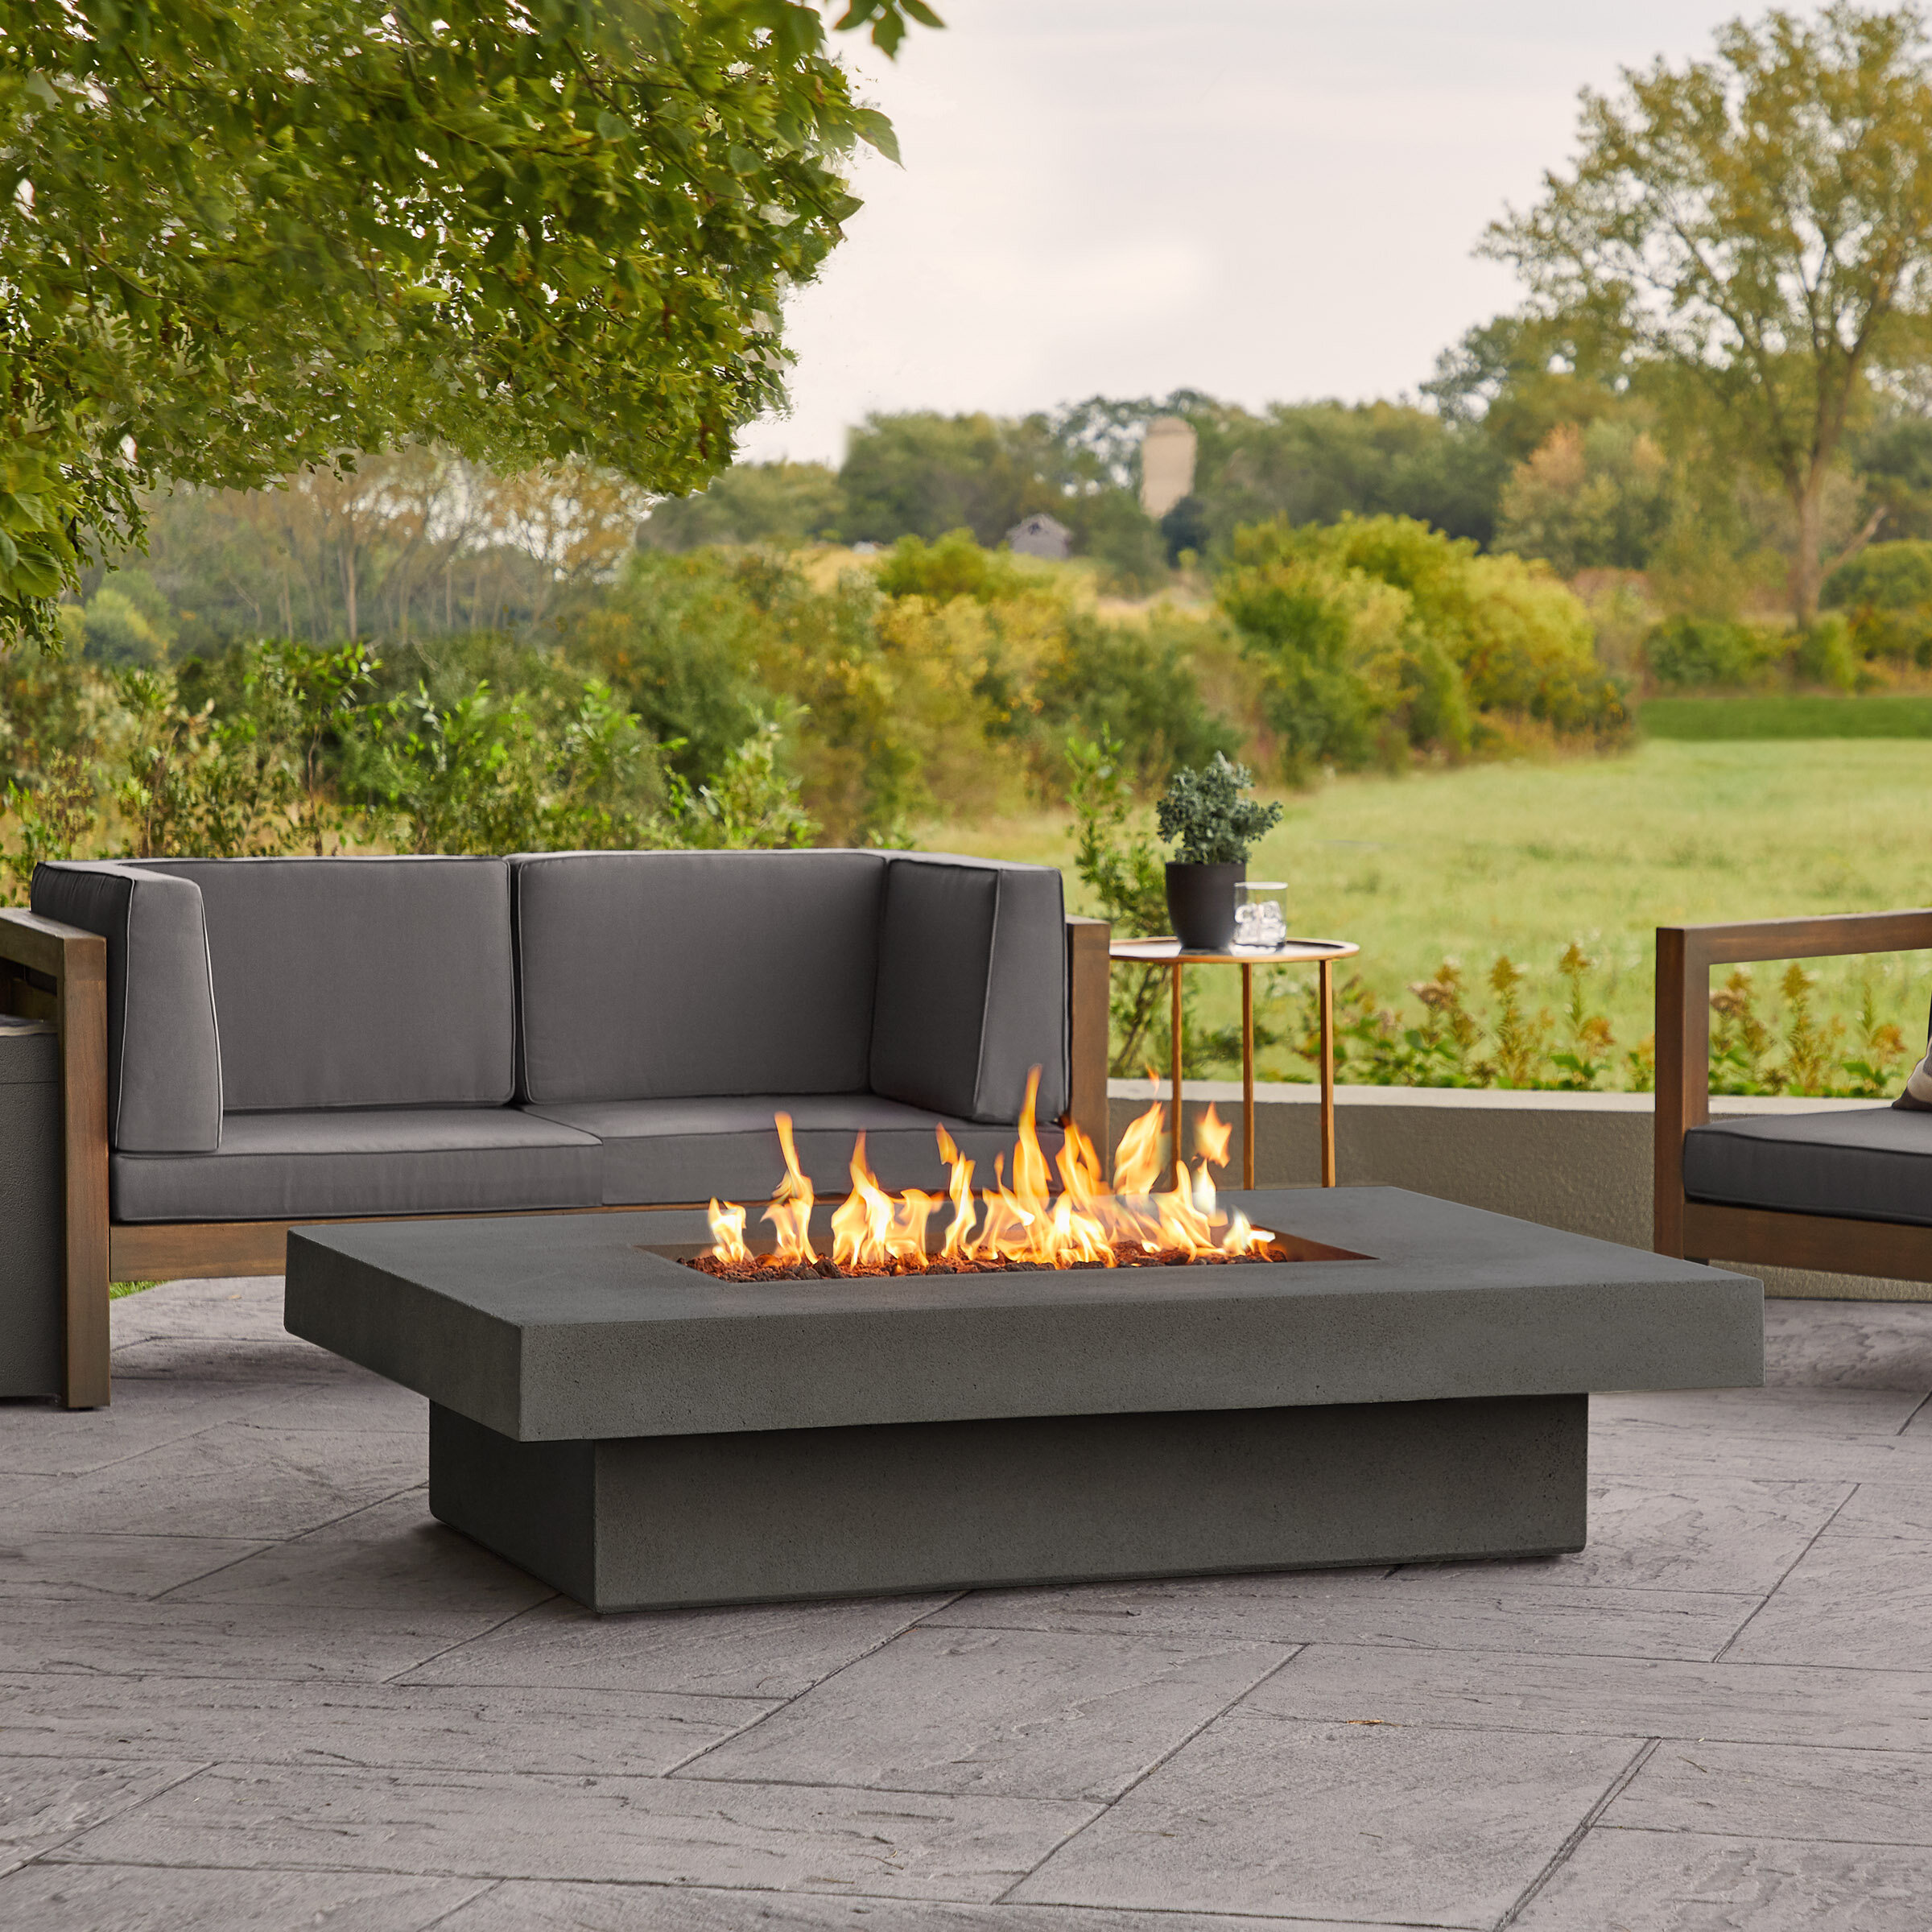 Greyleigh Cowden 14 H X 60 W Concrete Propane Outdoor Fire Pit Table Reviews Wayfair